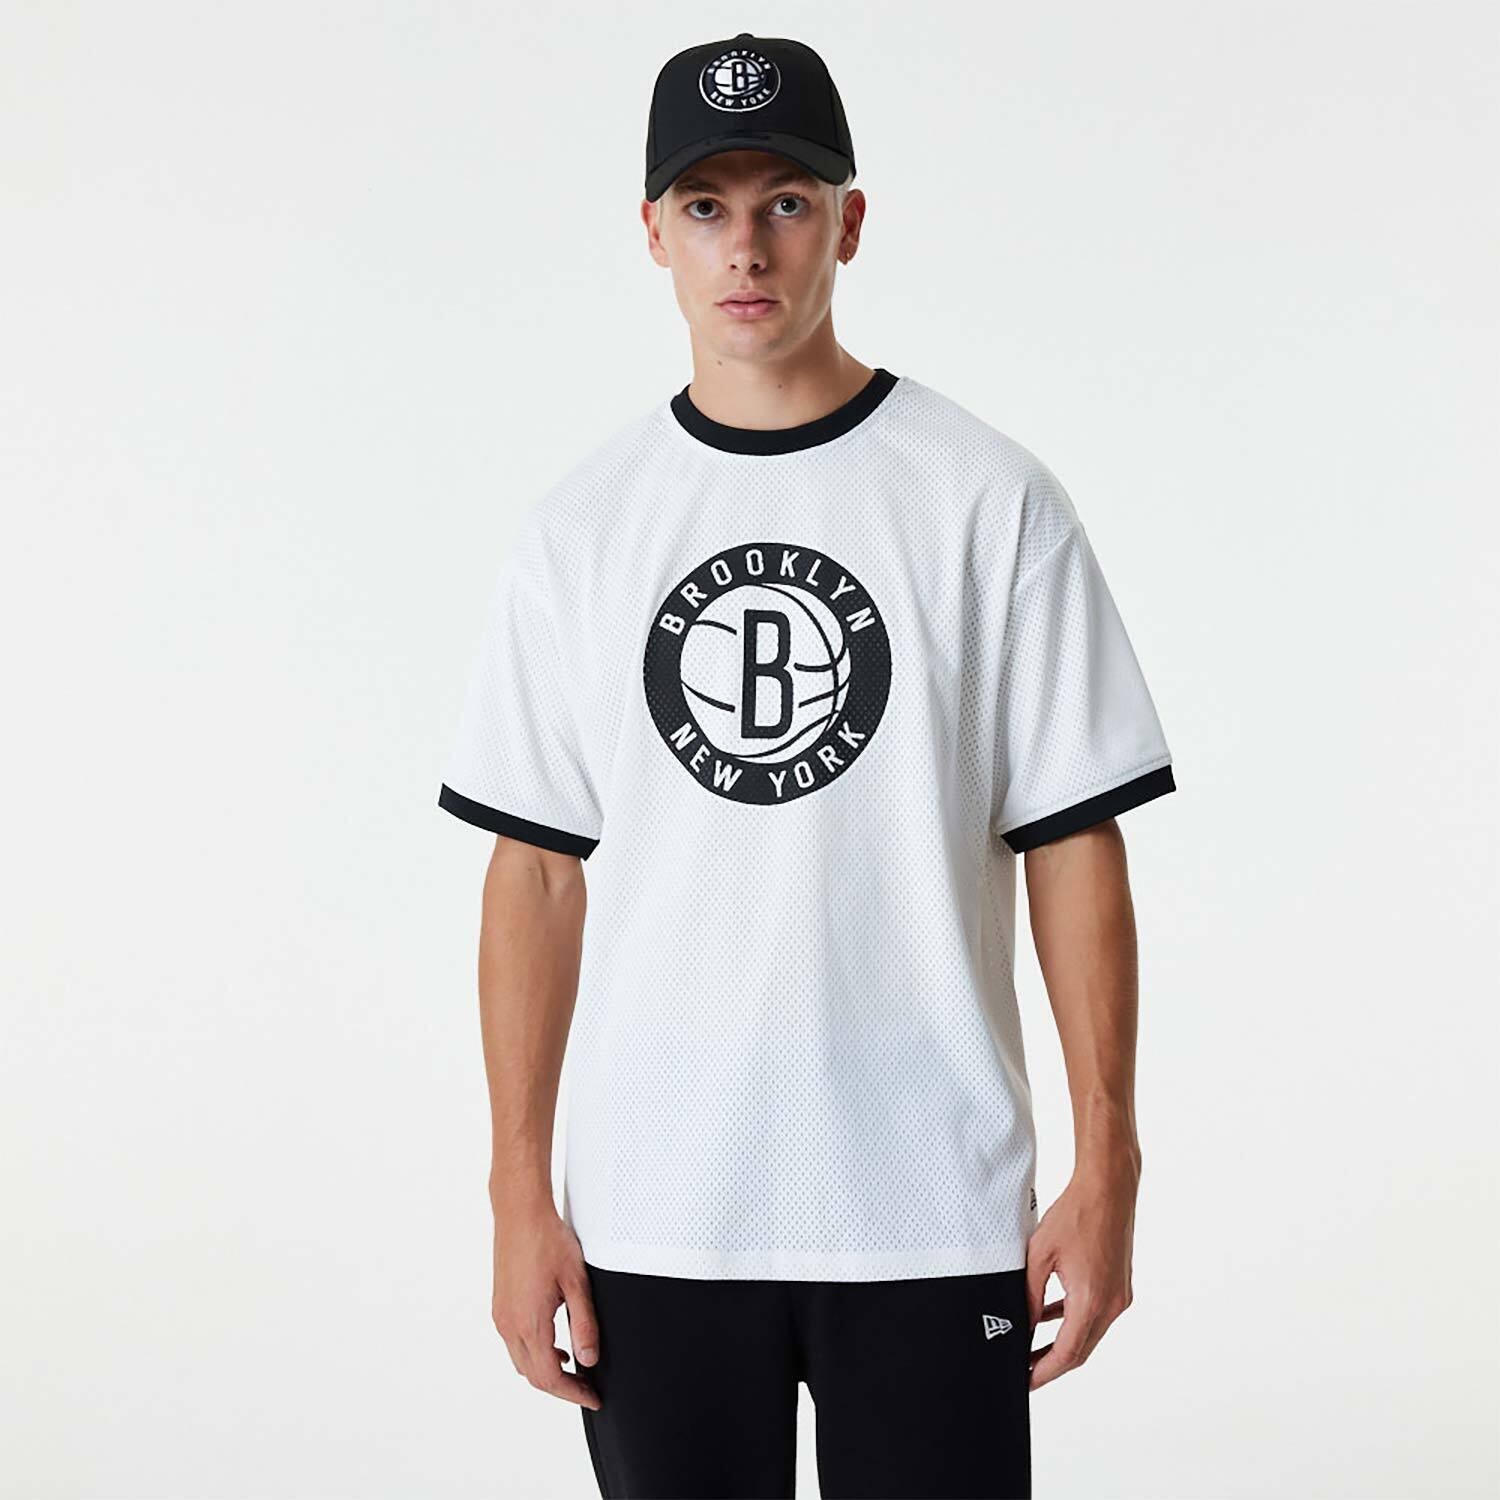 New era 60357097 NBA Baseball Brooklyn Nets Short Sleeve T-Shirt Black